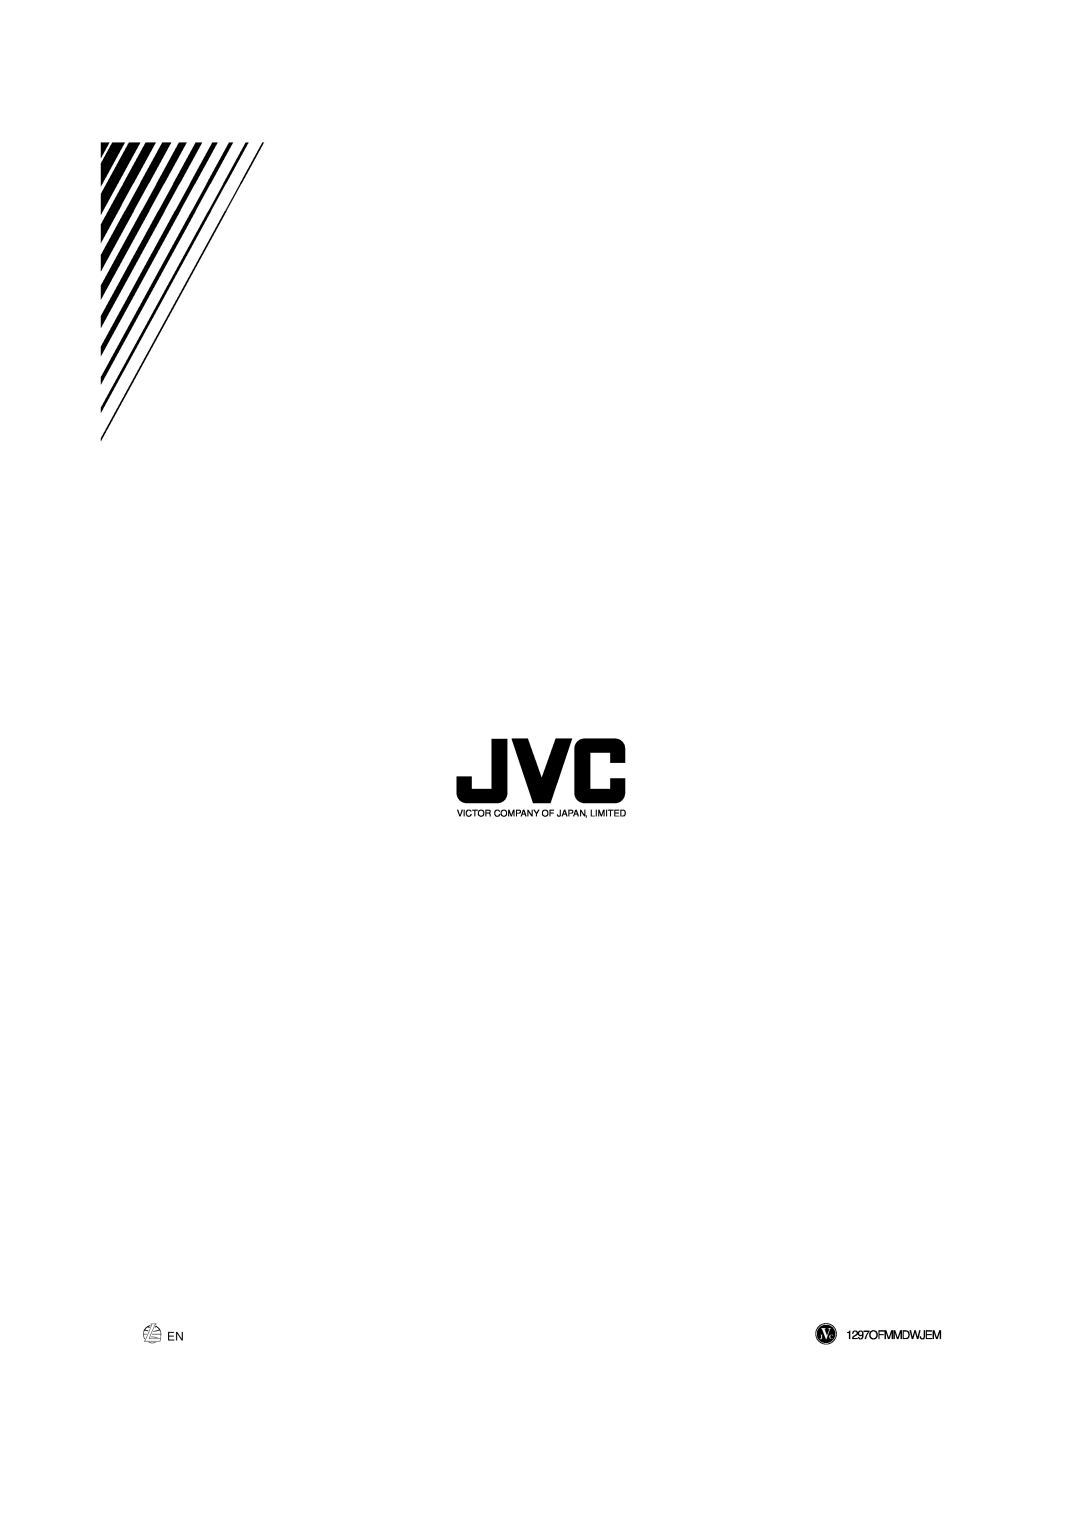 JVC RX-554VBK manual 1297OFMMDWJEM, Victor Company Of Japan, Limited 